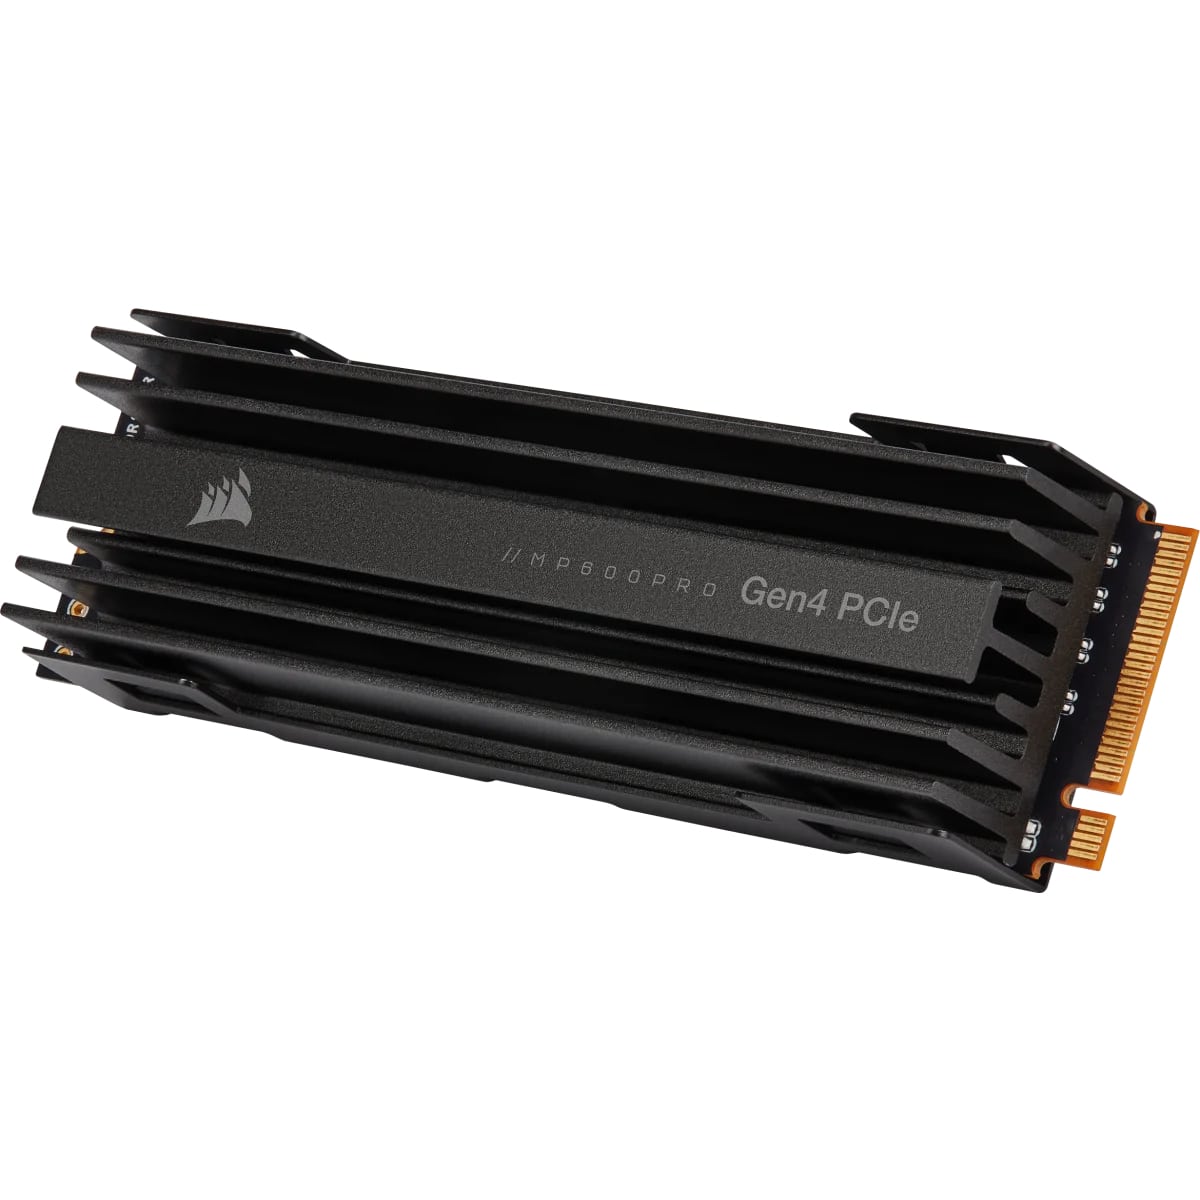 Corsair MP600 PRO Gen4 1TB PCIe 7000MB/s